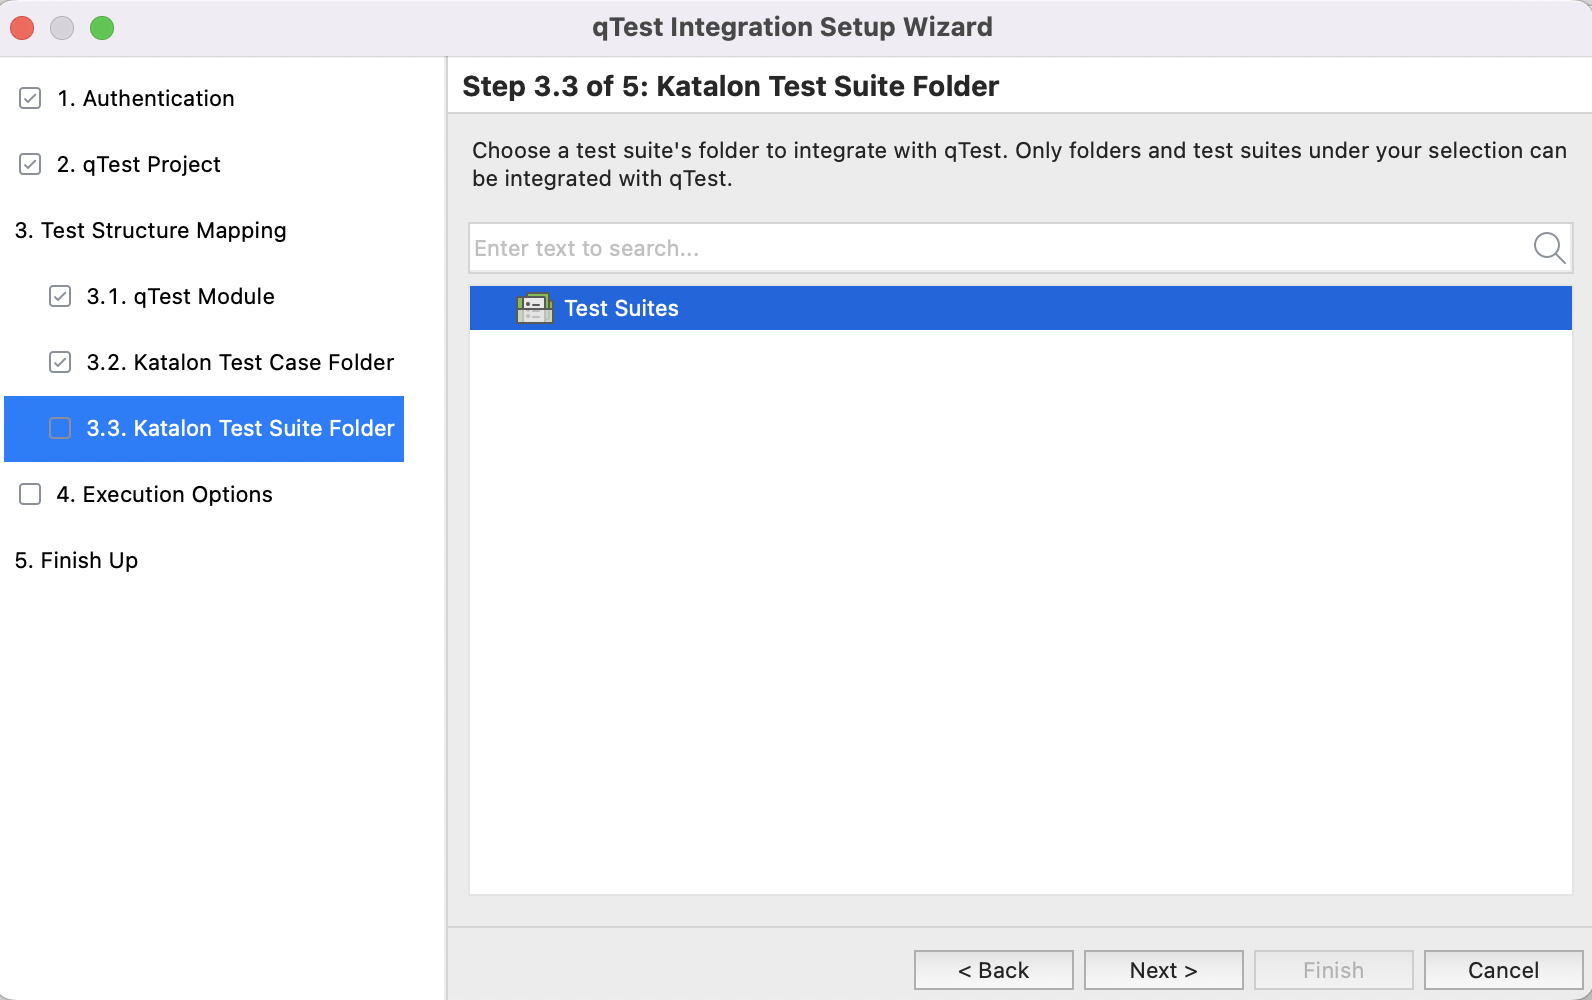 Select Katalon test suite folder in the Setup Wizard